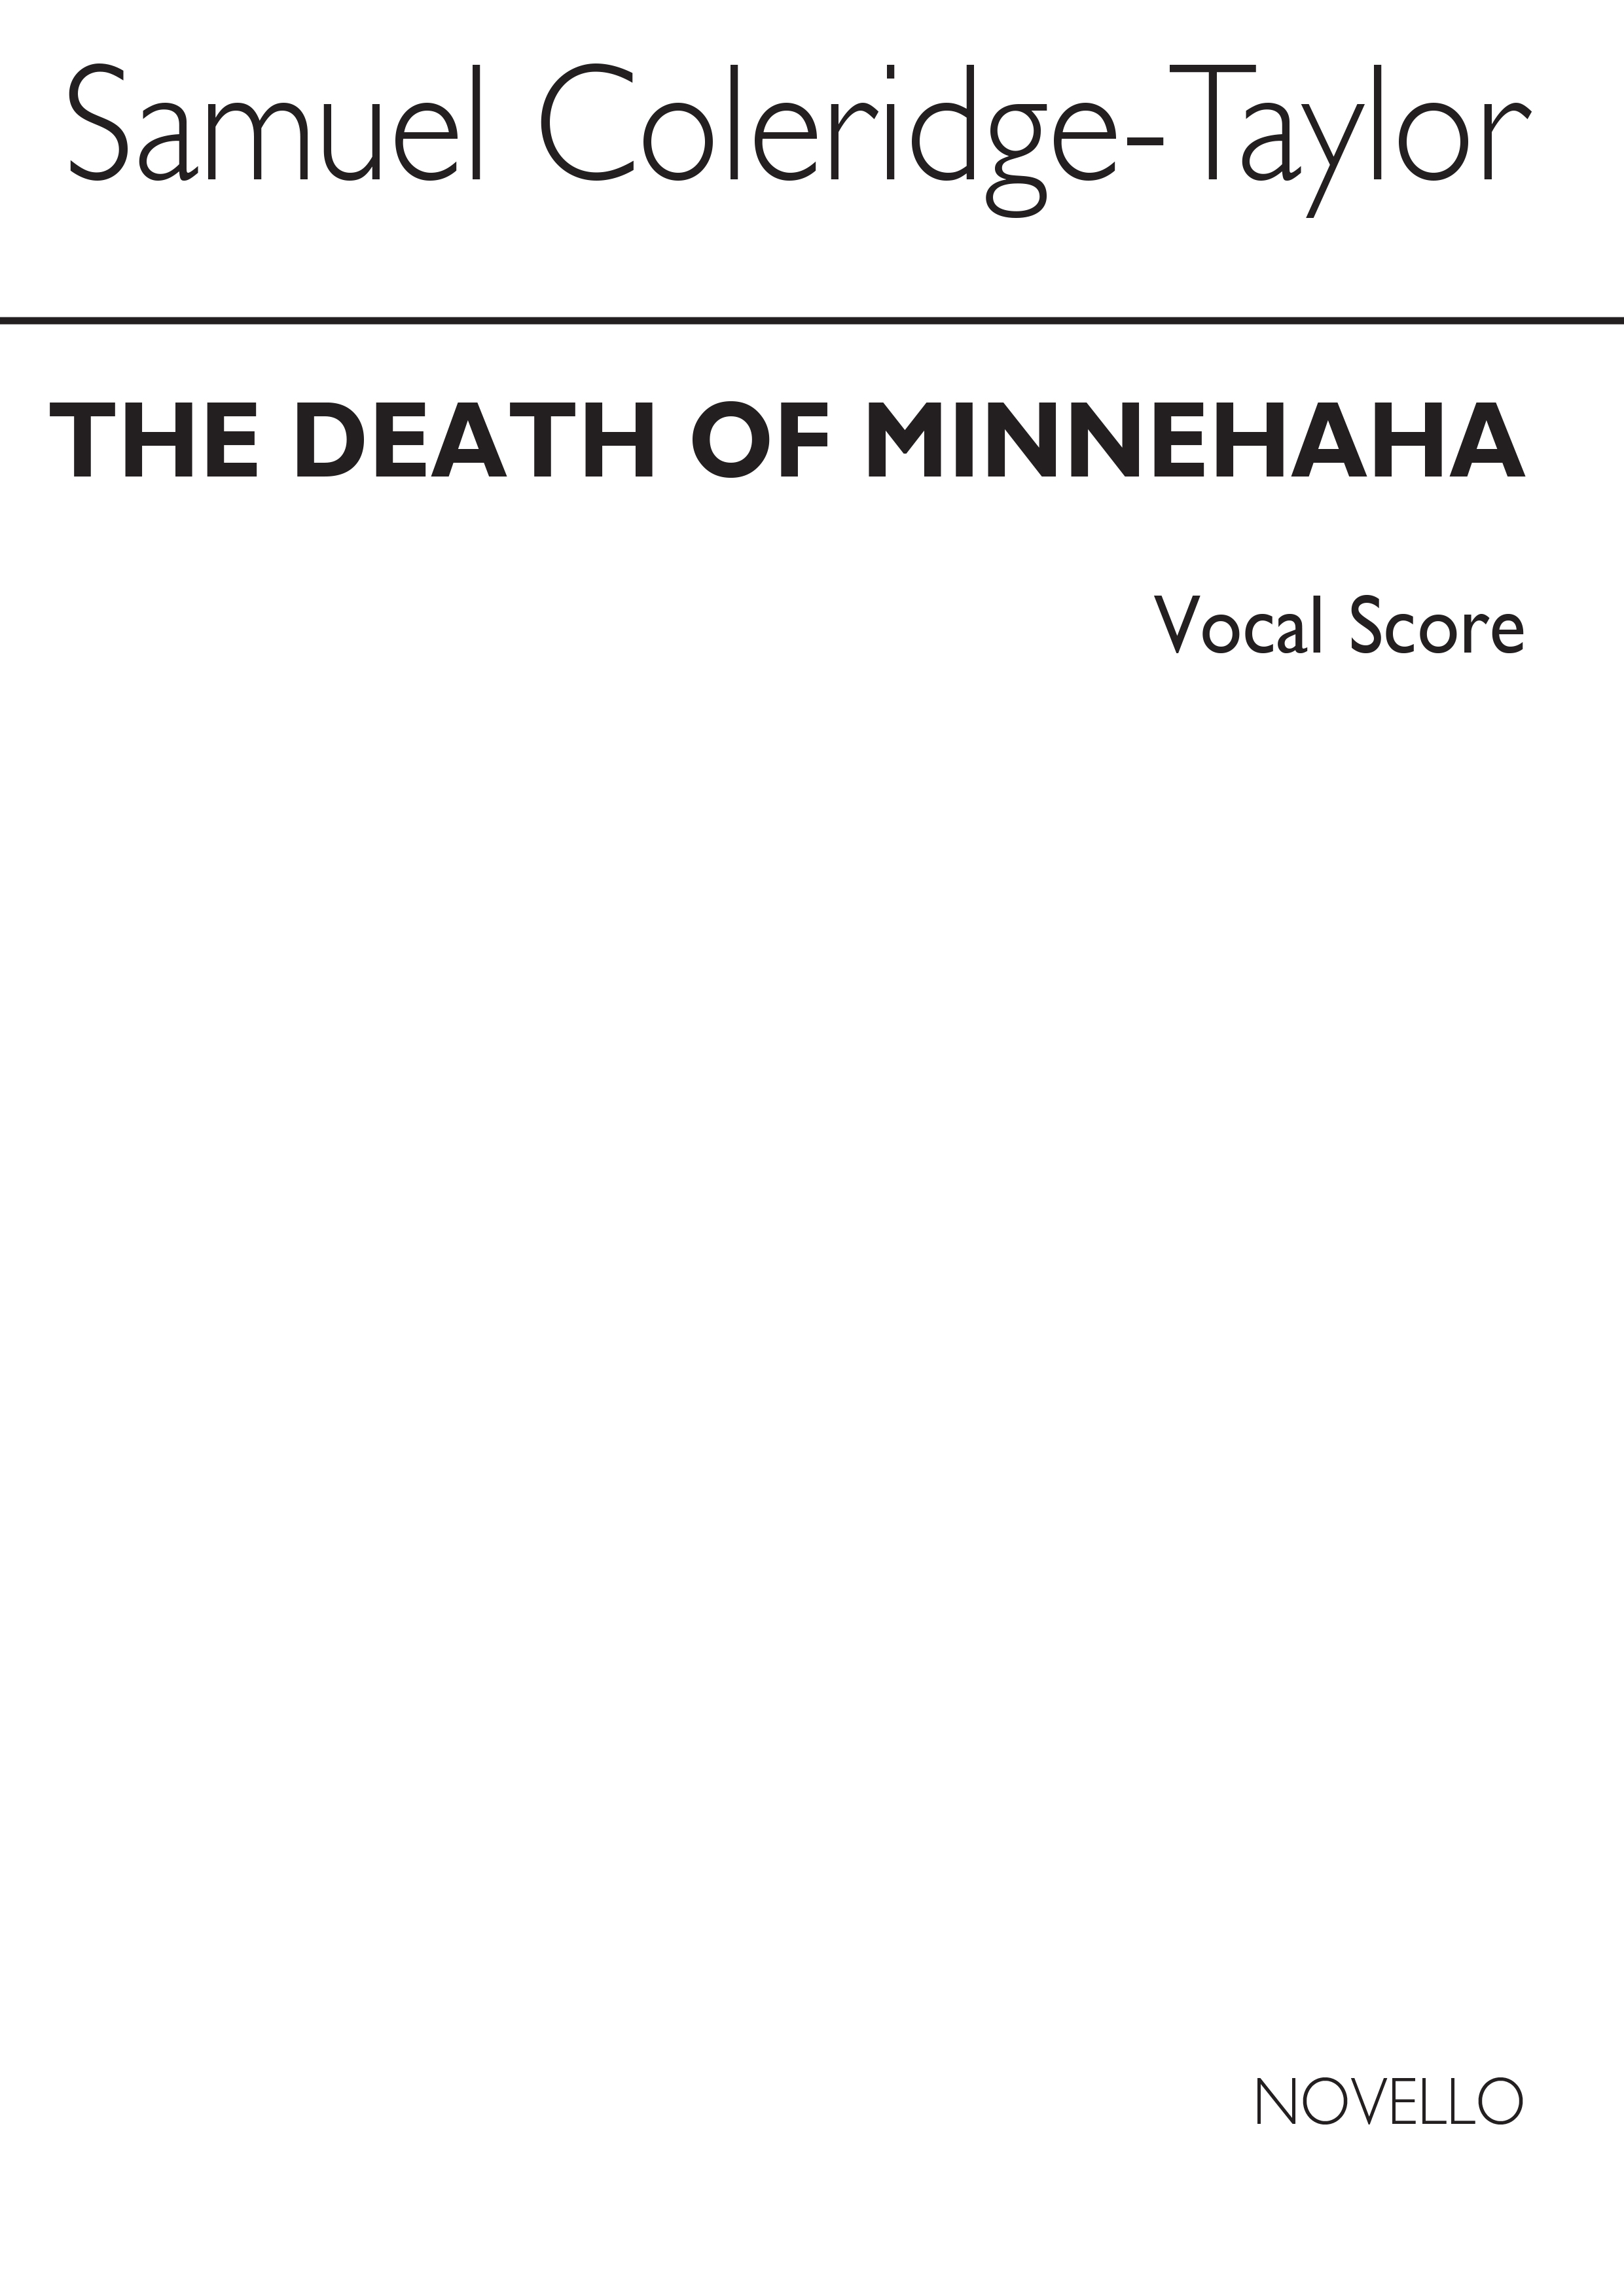 Samuel Coleridge-Taylor: Death of Minnehaha - Vocal Score